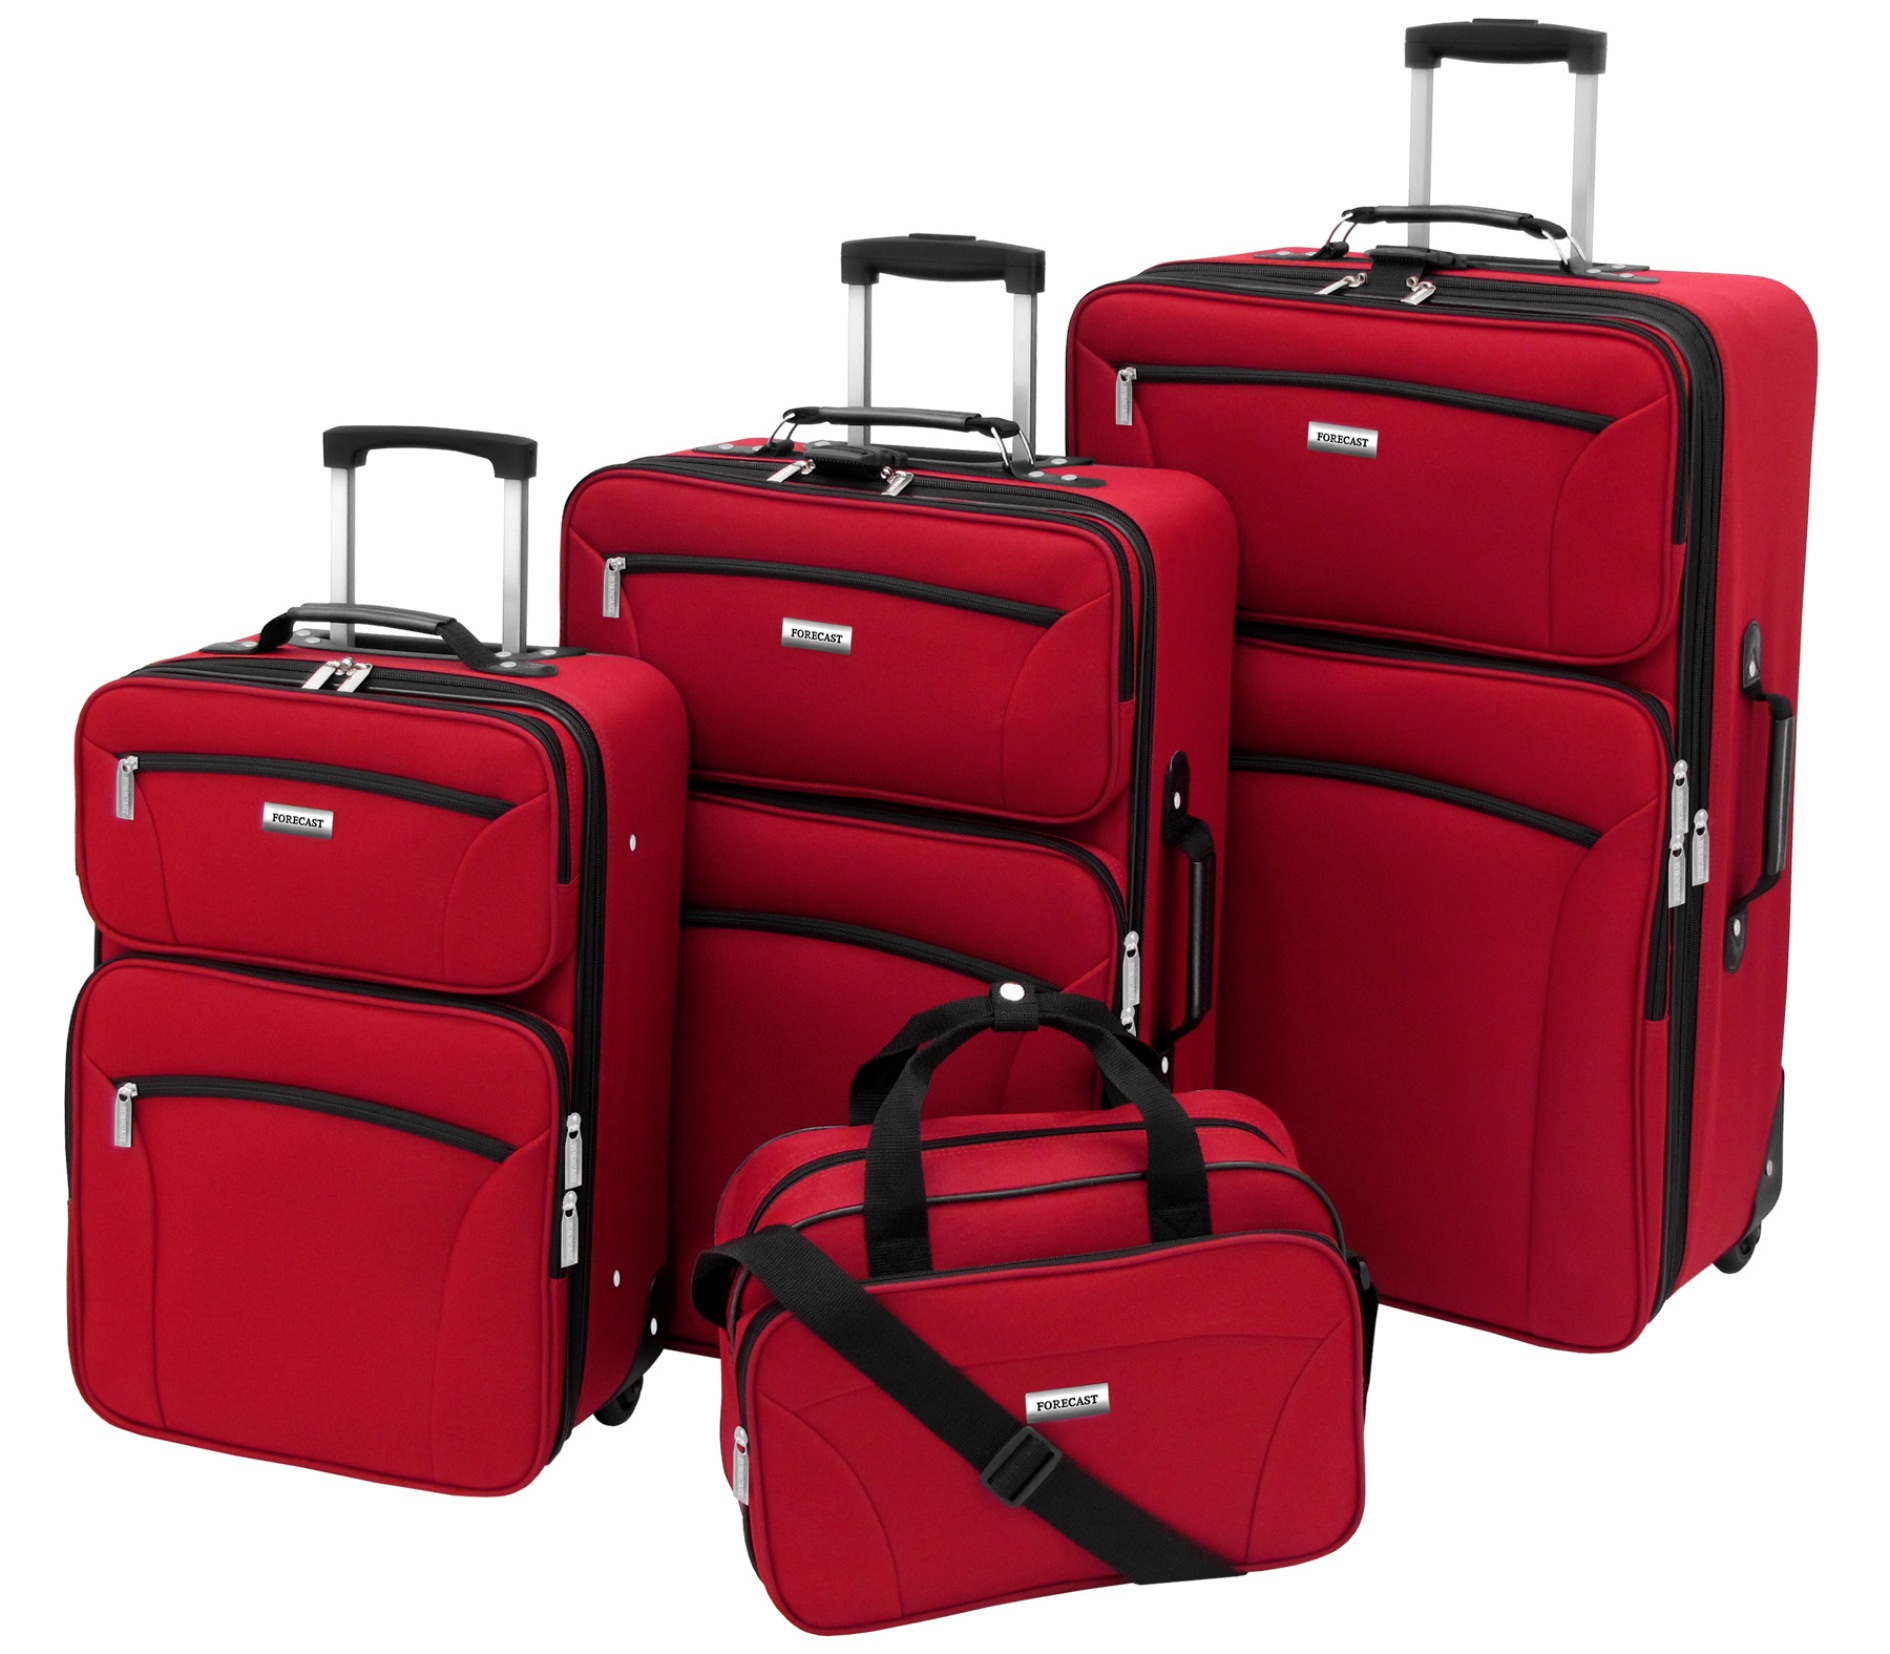 Forecast Barbados 4 Piece Set Luggage - Red